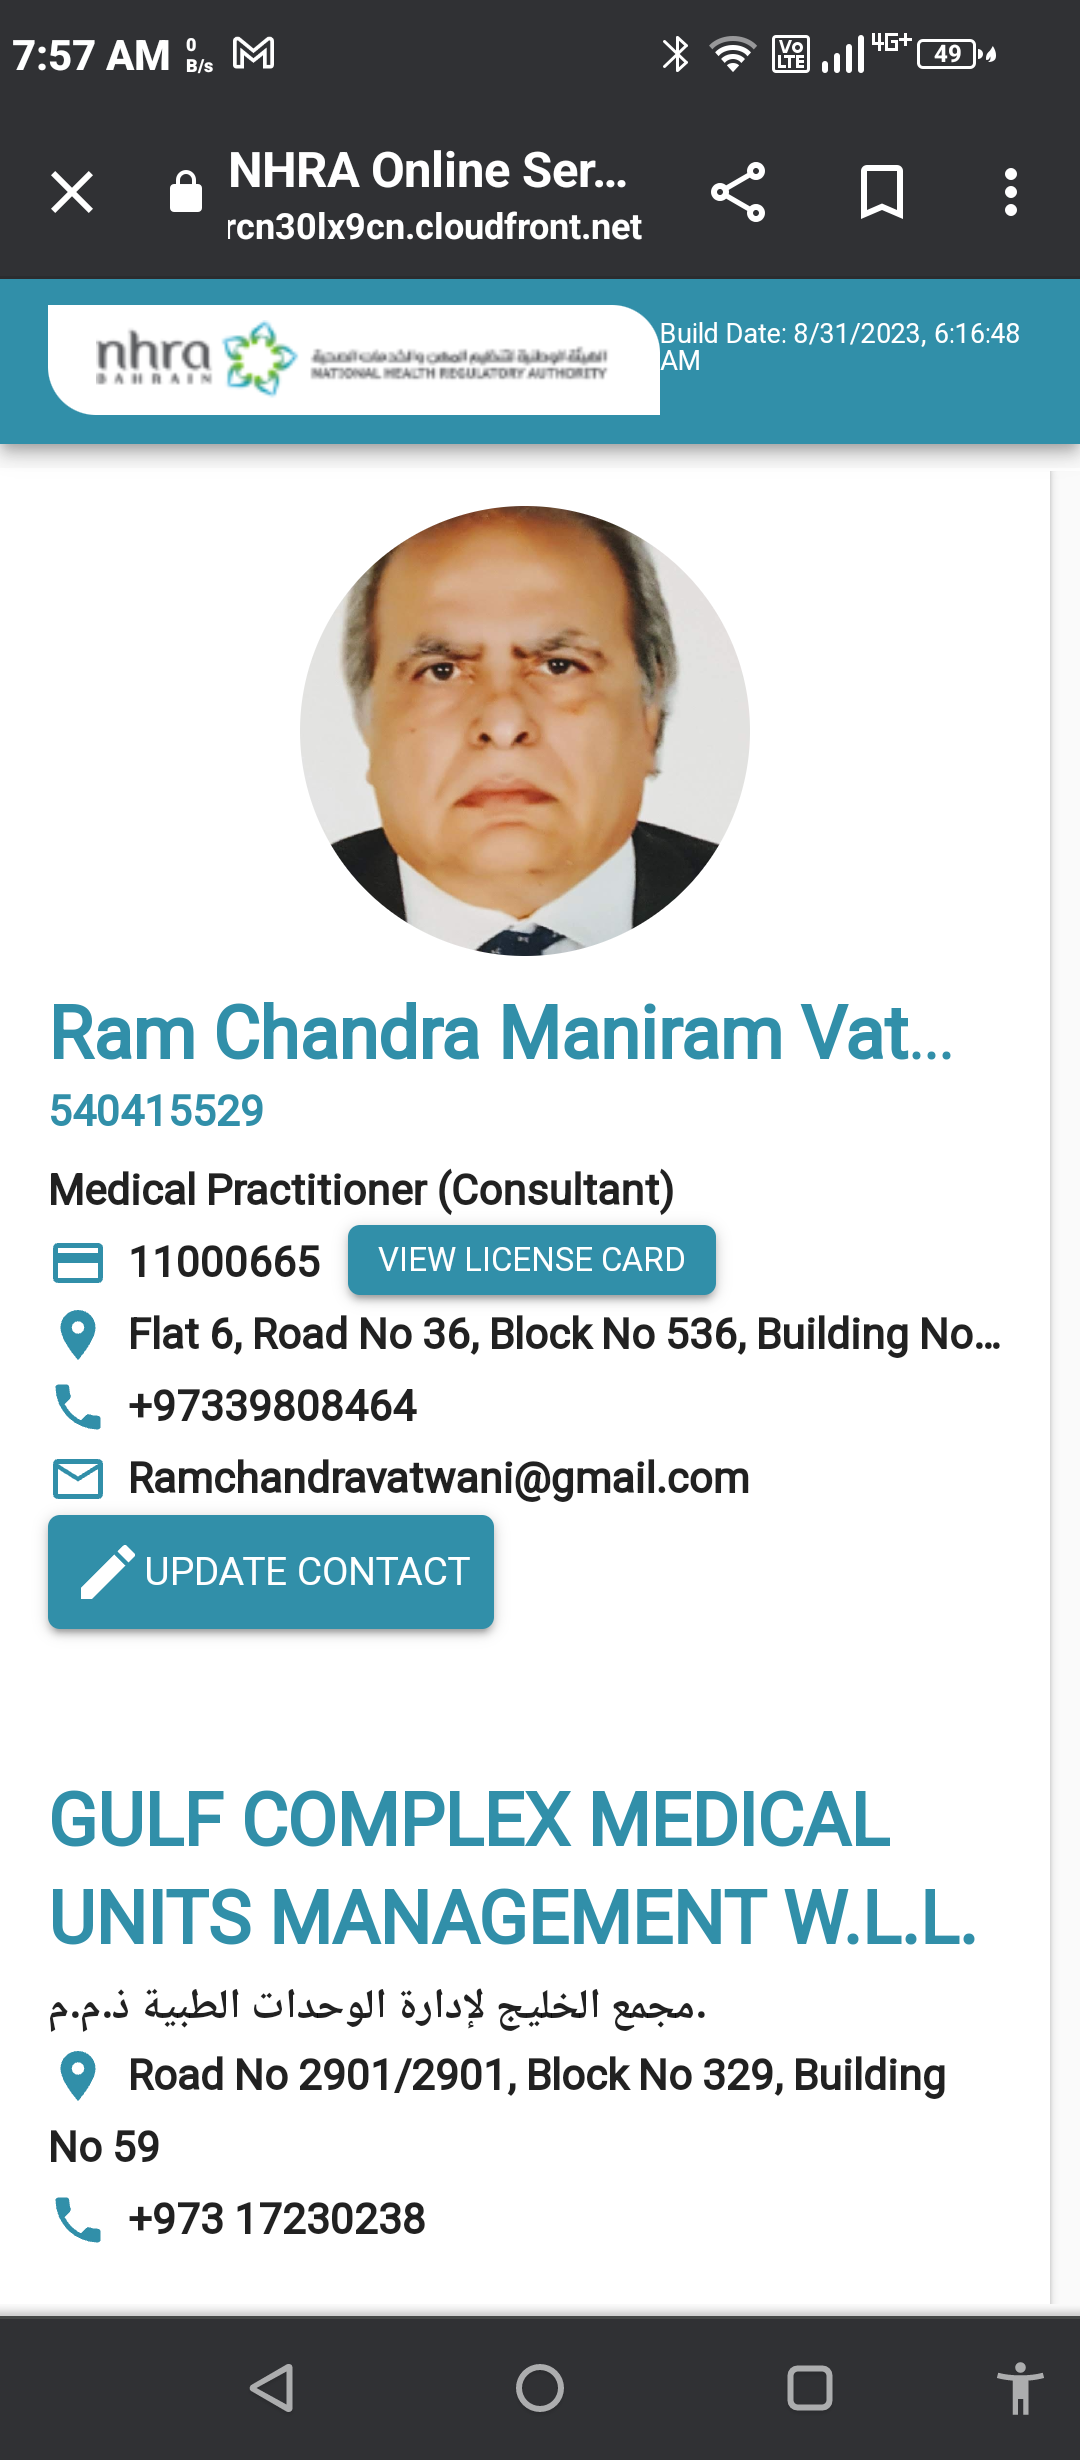 YEA EY! X= @.al* ED.

X @ NHRA Online Ser... o<° 0

rcn30Ix9cn.cloudfront.net

Build Date: 8/31/2023, 6:16:48
AM

 

Ram Chandra Maniram Vat...
540415529

Medical Practitioner (Consultant)

© Flat 6, Road No 36, Block No 536, Building No...
t. +97339808464
MM Ramchandravatwani@gmail.com

V4 UPDATE CONTACT

GULF COMPLEX MEDICAL
UNITS MANAGEMENT W.L.L.

ppd dual Olas oll 33153 dsl gasna.
© Road No 2901/2901, Block No 329, Building
No 59

t. +97317230238

NY